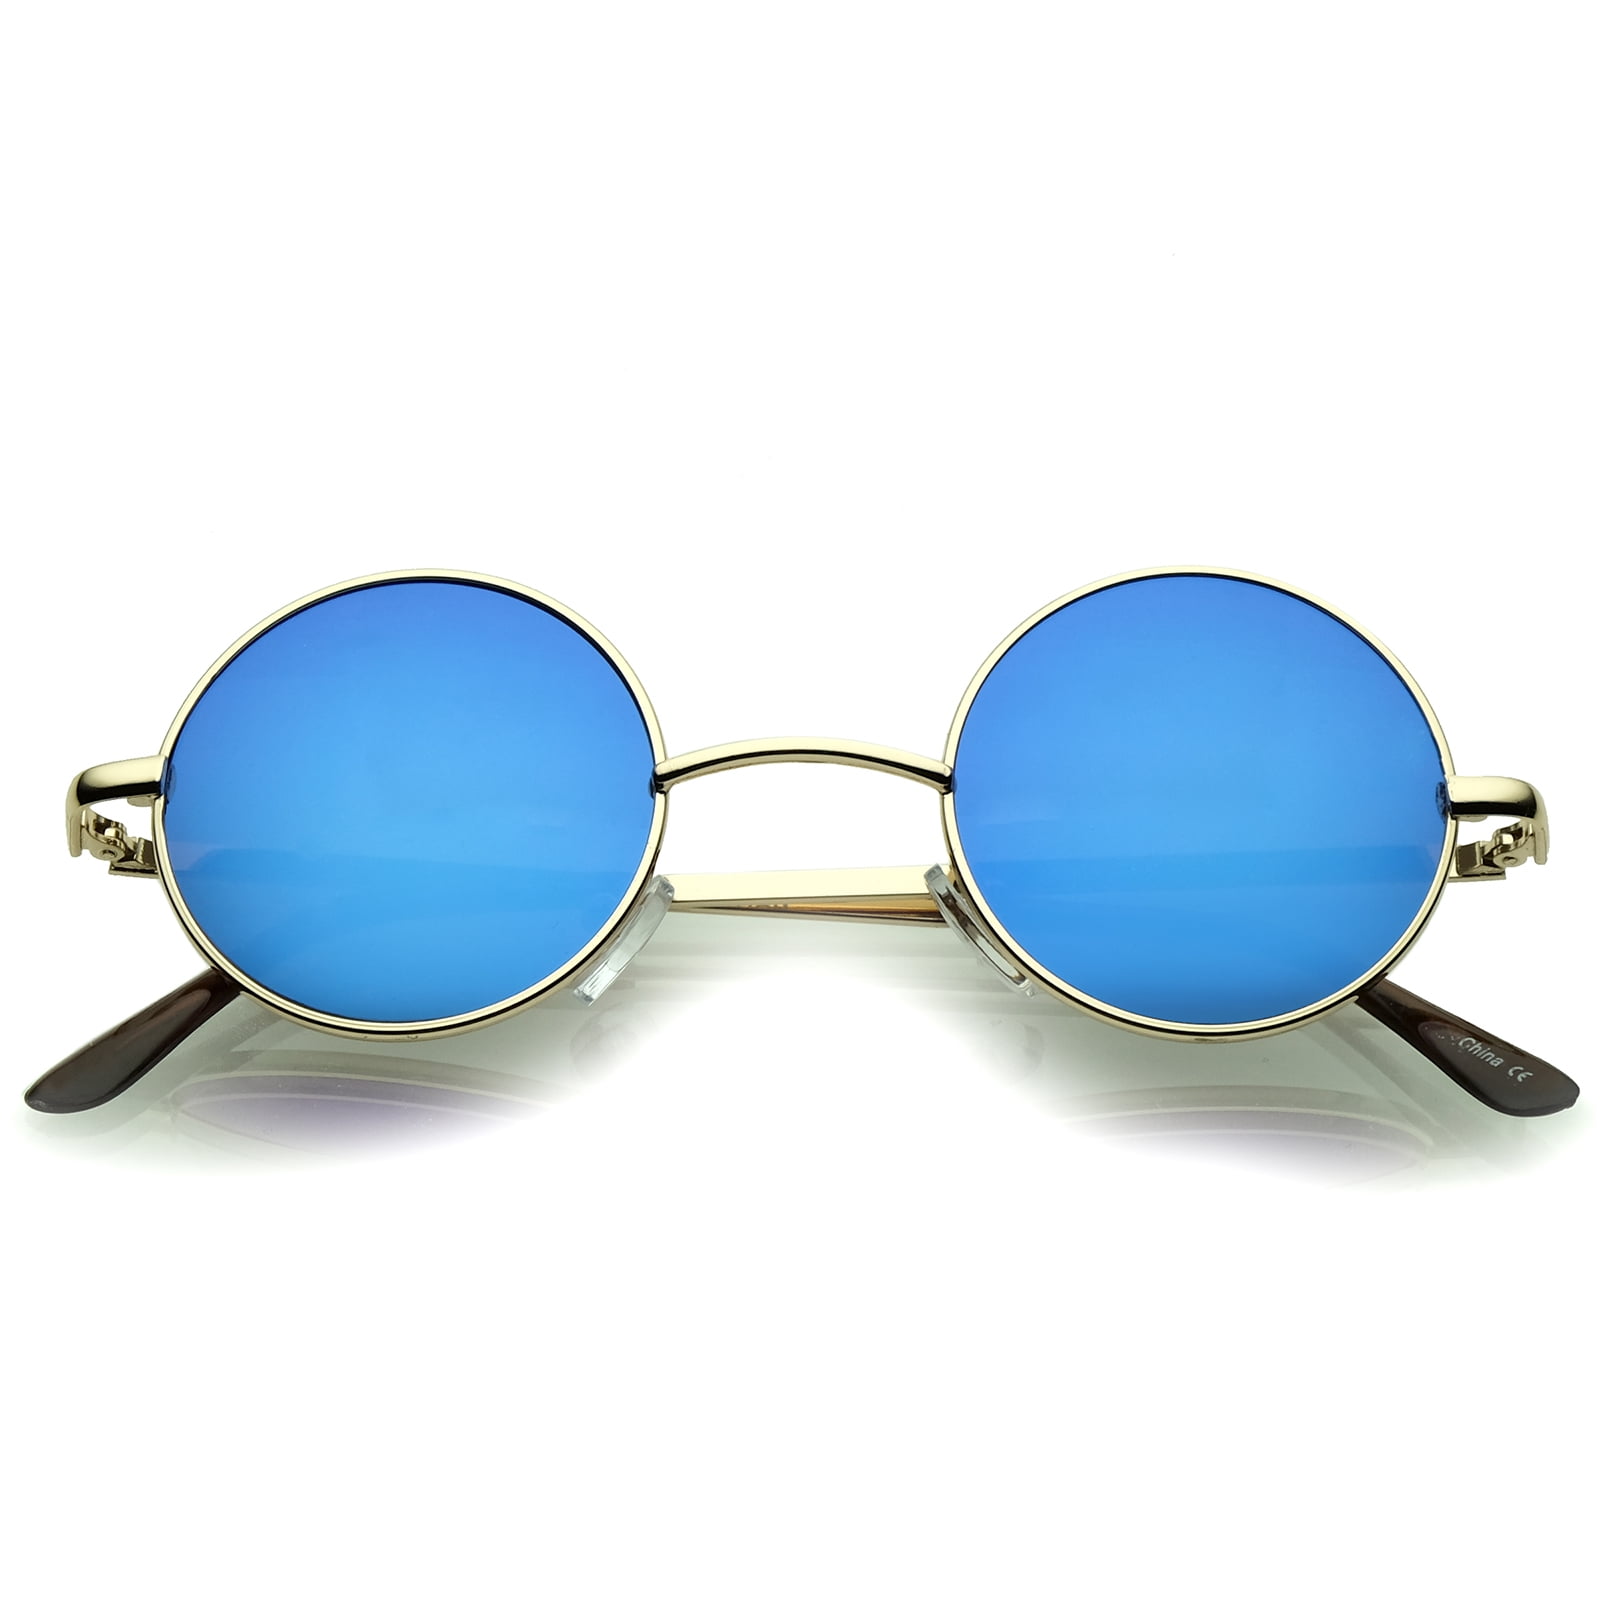 Sunglassla Unisex Small Retro Lennon Inspired Style Colored Mirror Lens Round Metal Sunglasses